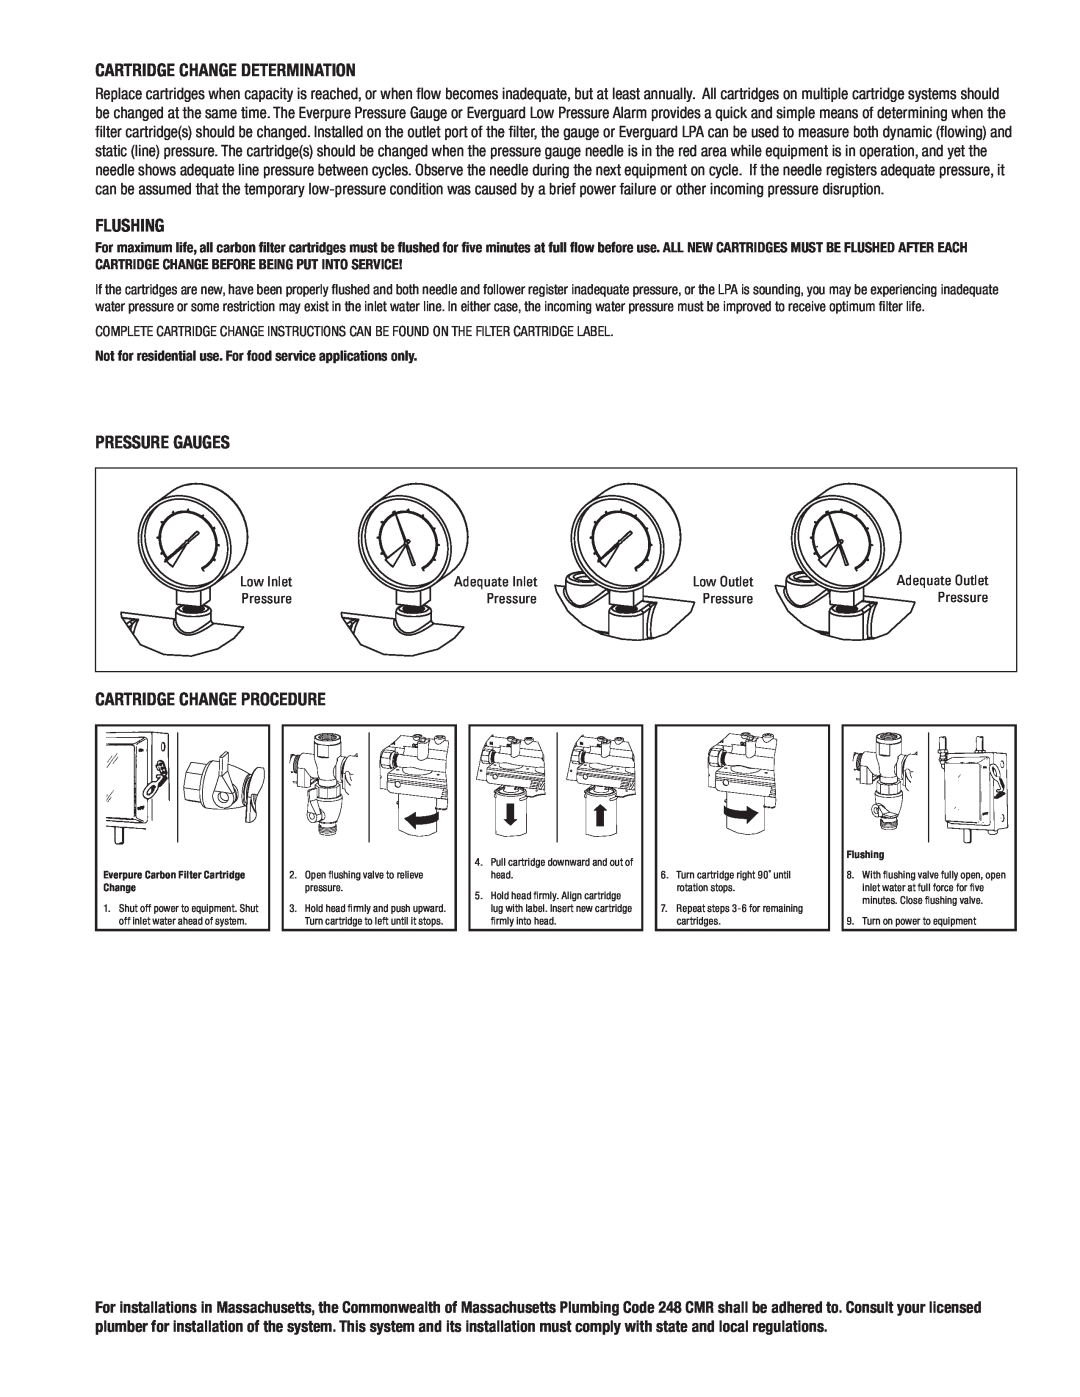 Everpure QC71 Cartridge Change Determination, Flushing, Pressure Gauges, Cartridge Change Procedure 